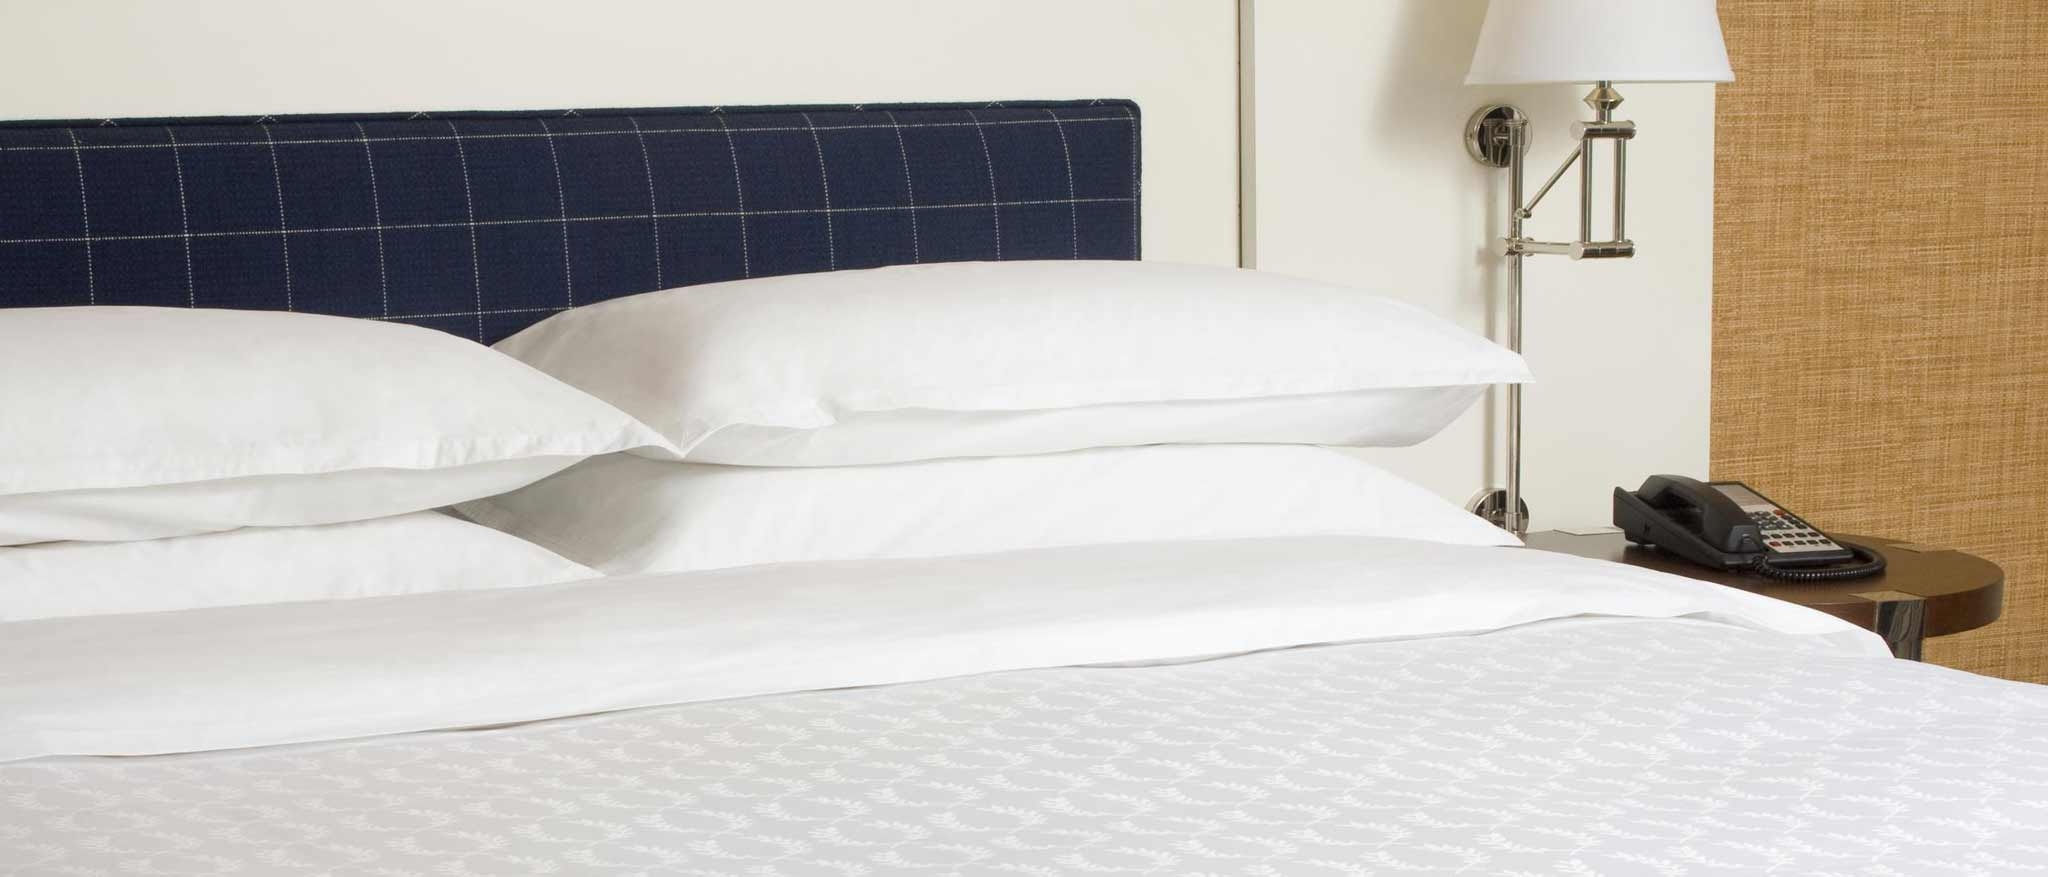 sheraton sweet sleeper bed mattress